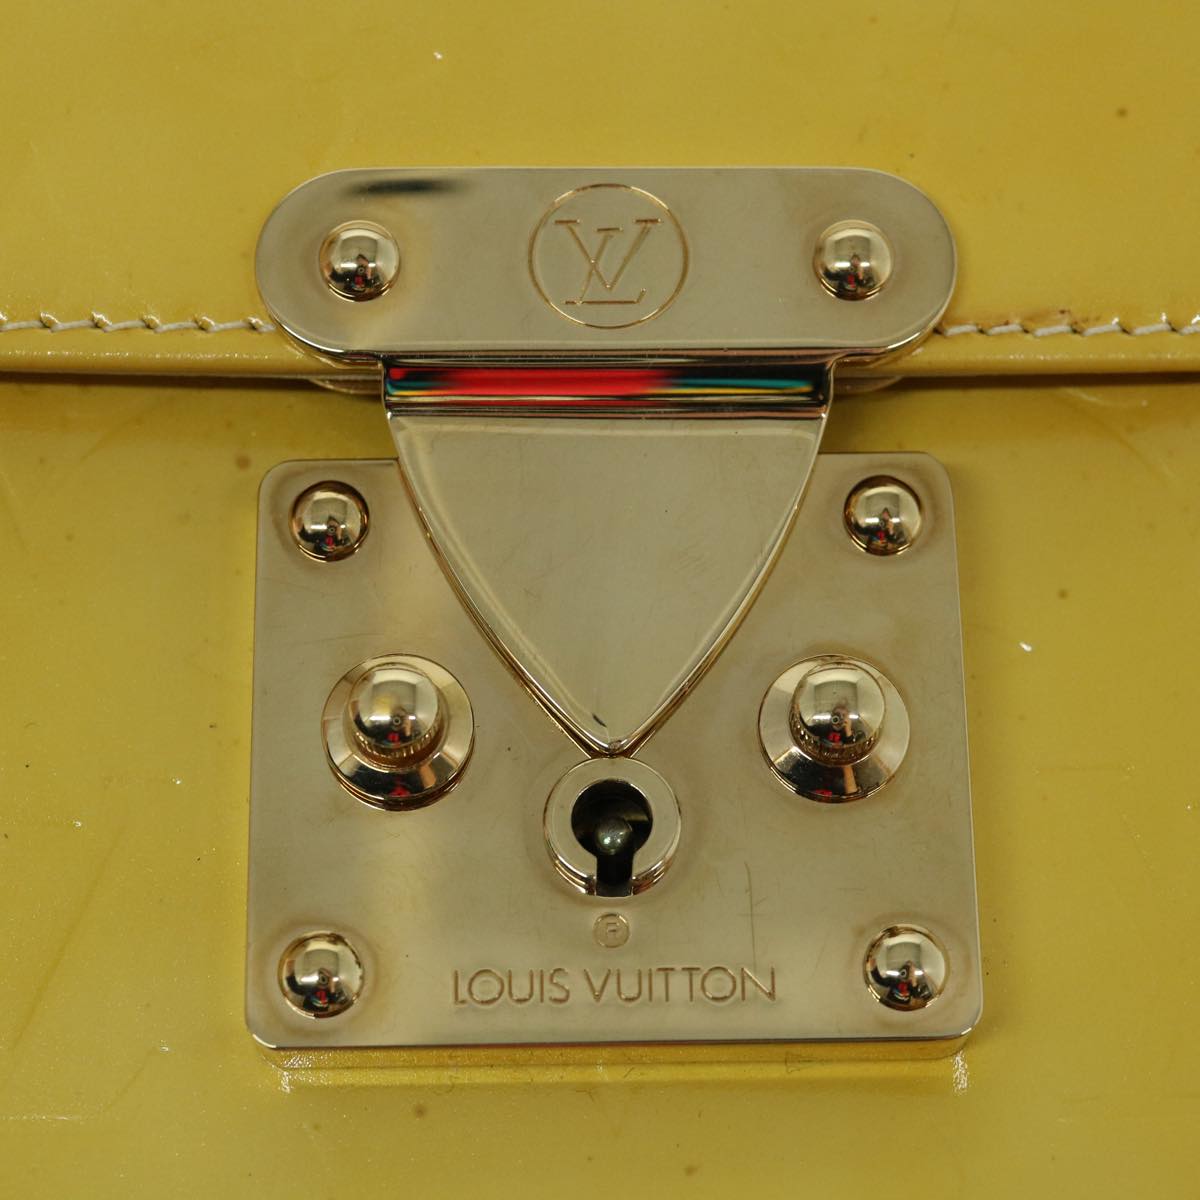 LOUIS VUITTON Monogram Vernis Spring Street Bag Lime Yellow M91068 LV Auth 62187